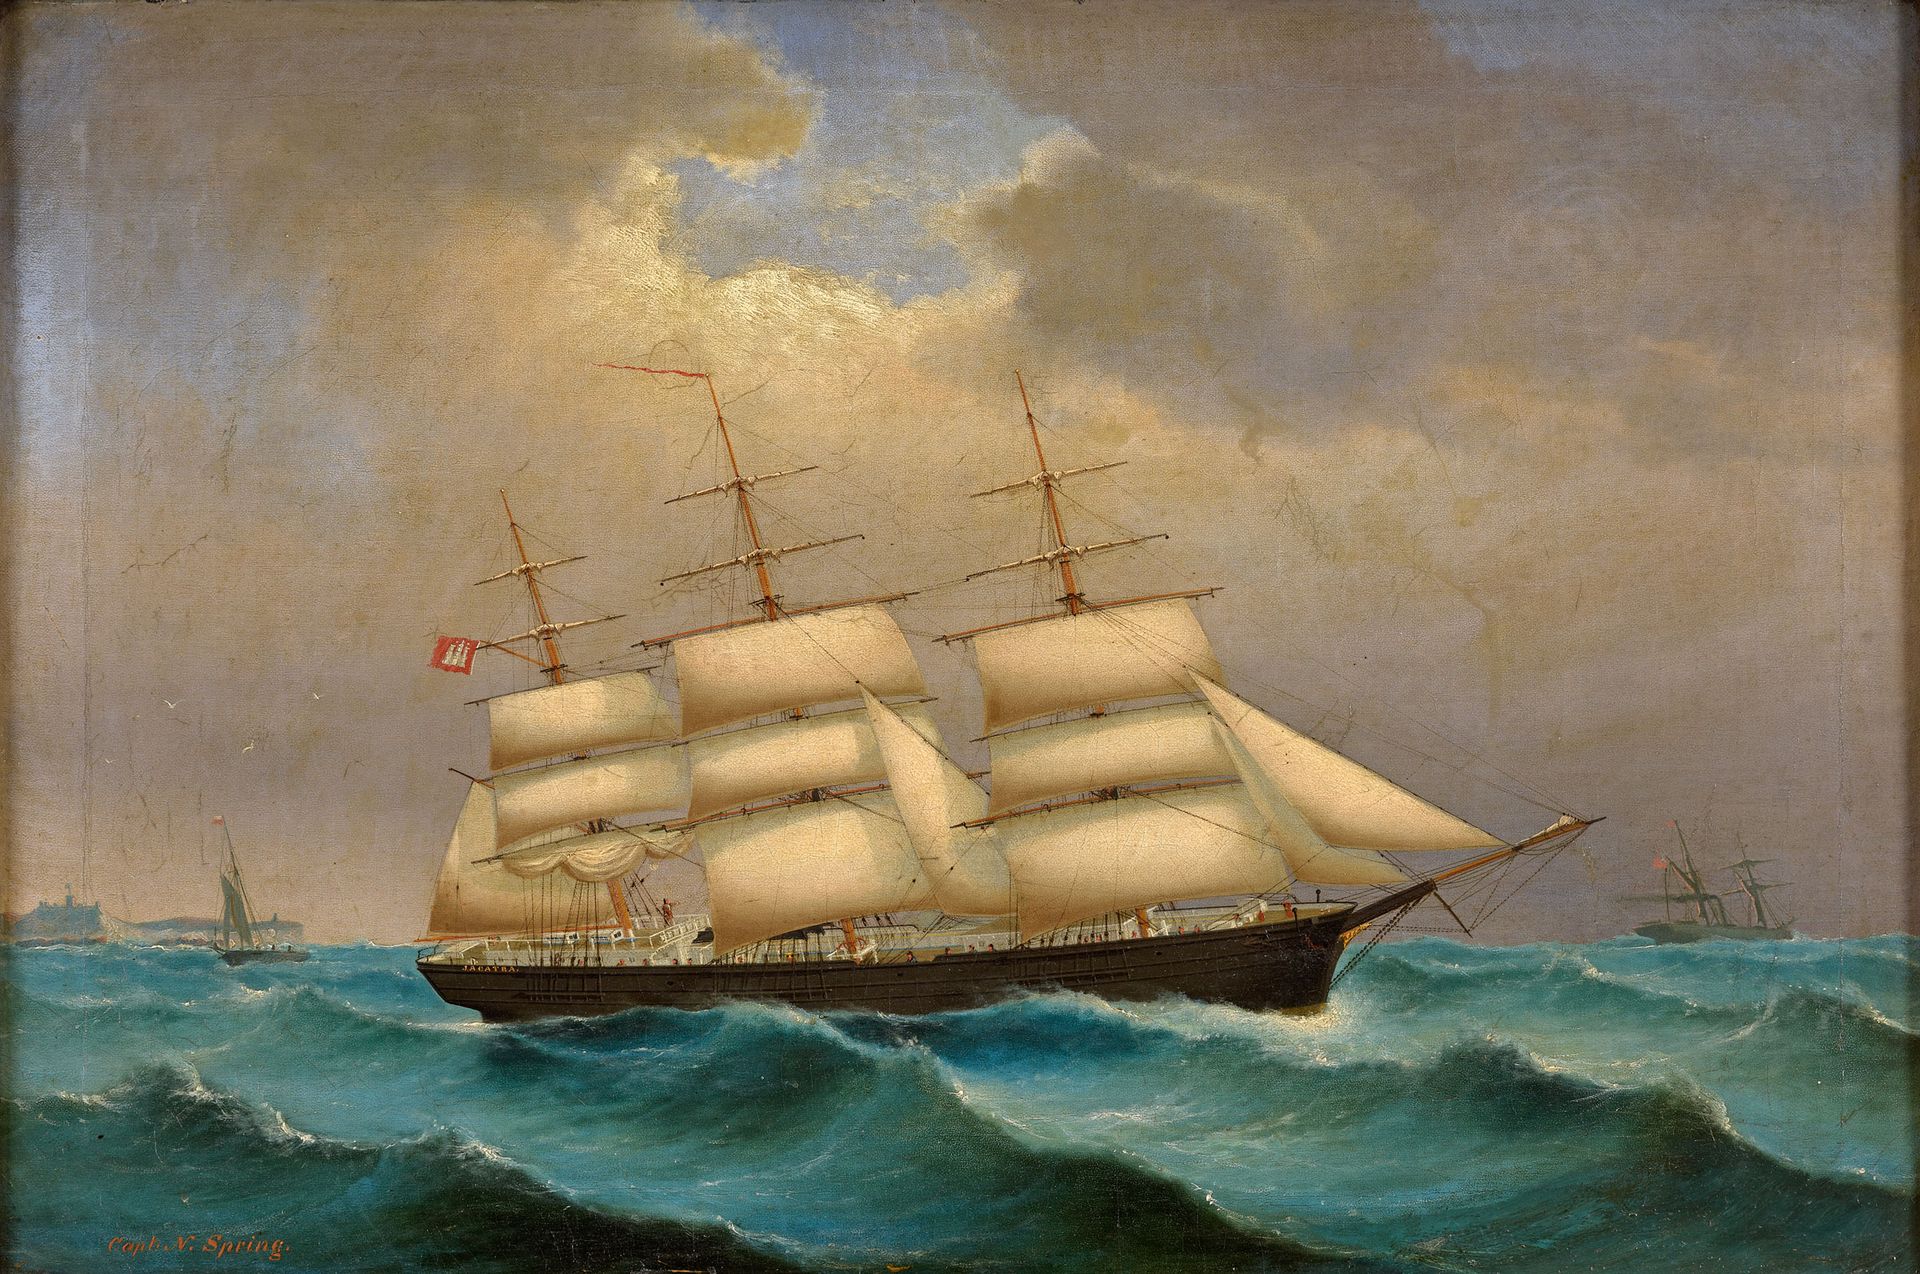 Kapitänsbild Tableau de capitaine 19e siècle.
Le Jacatra, capitaine N. Spring.
A&hellip;